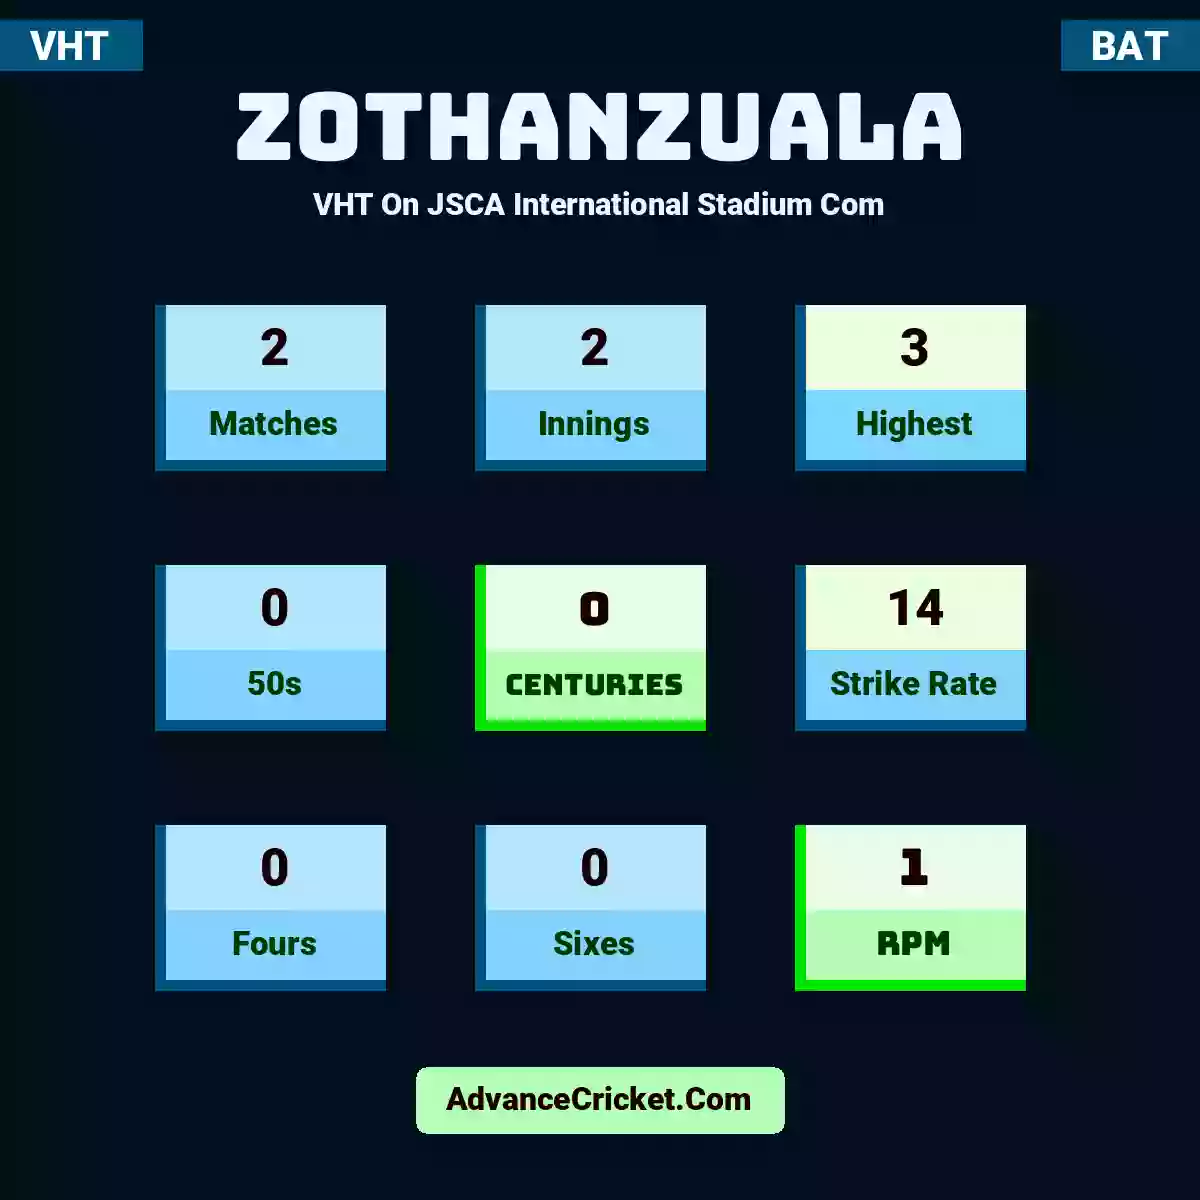 Zothanzuala VHT  On JSCA International Stadium Com, Zothanzuala played 2 matches, scored 3 runs as highest, 0 half-centuries, and 0 centuries, with a strike rate of 14. Zothanzuala hit 0 fours and 0 sixes, with an RPM of 1.